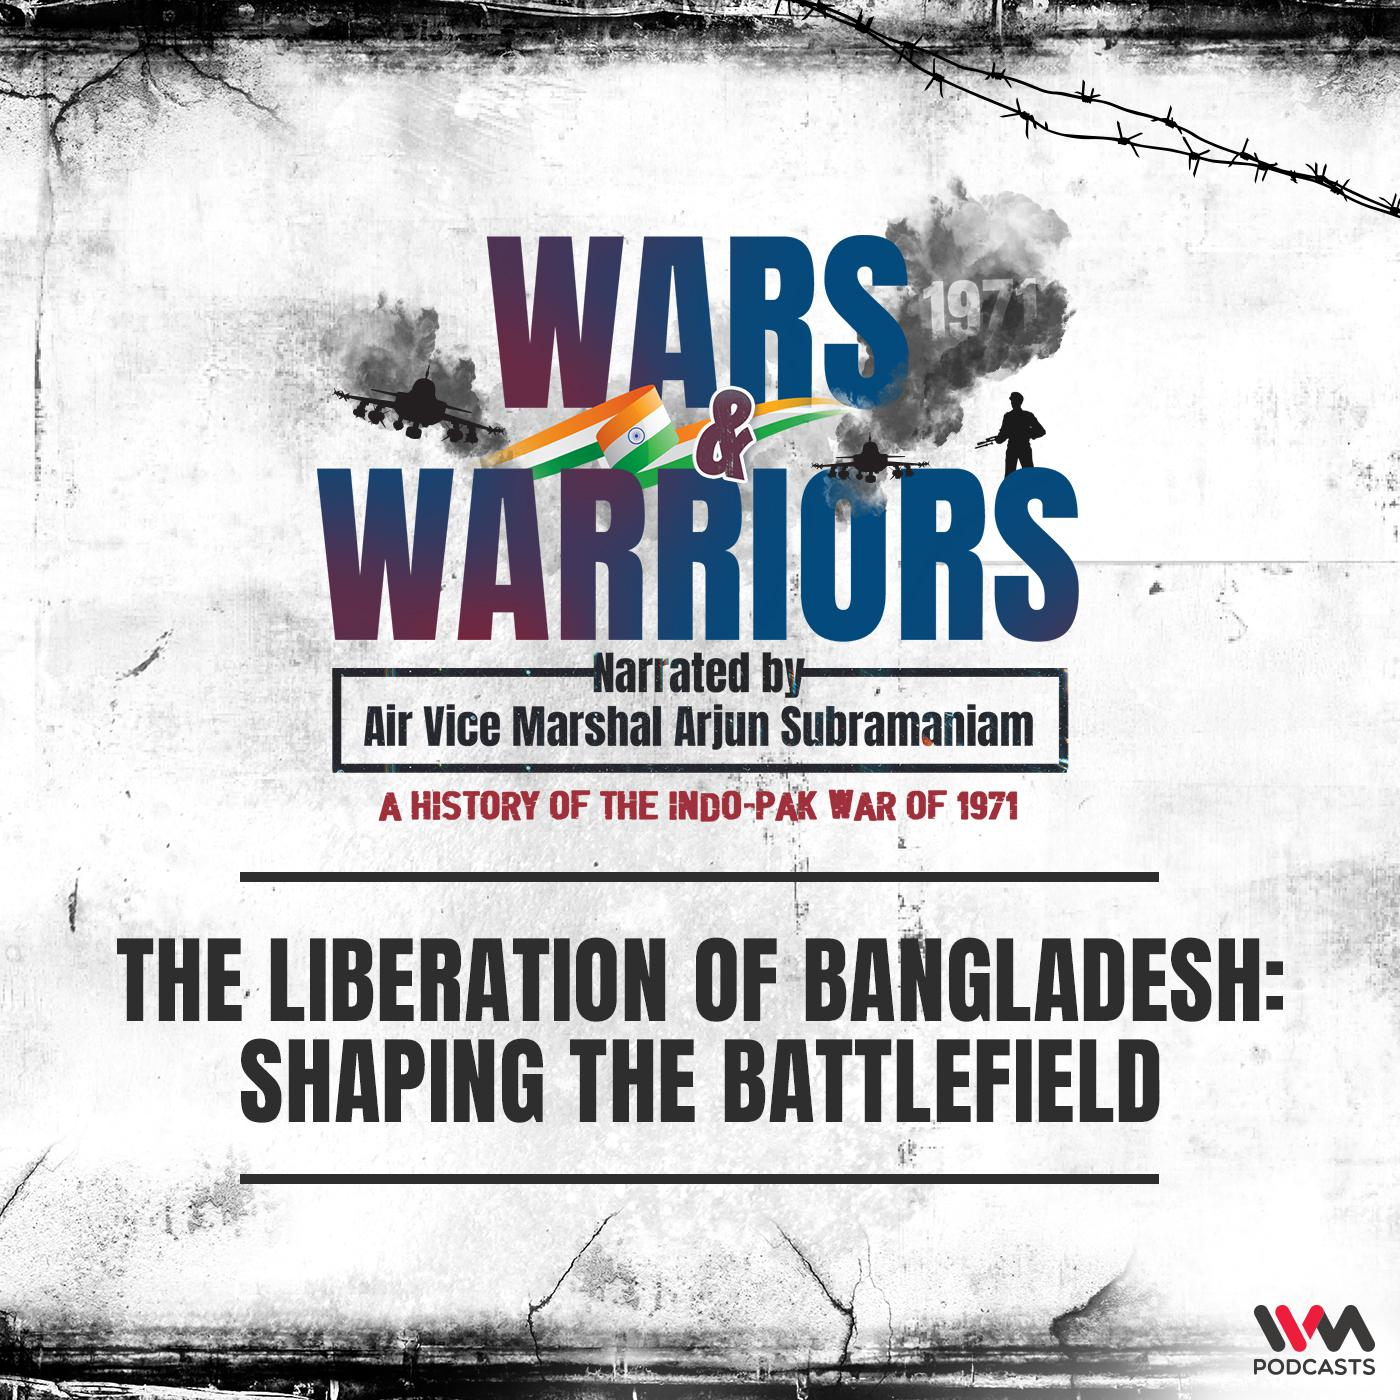 The Liberation of Bangladesh: Shaping the Battlefield